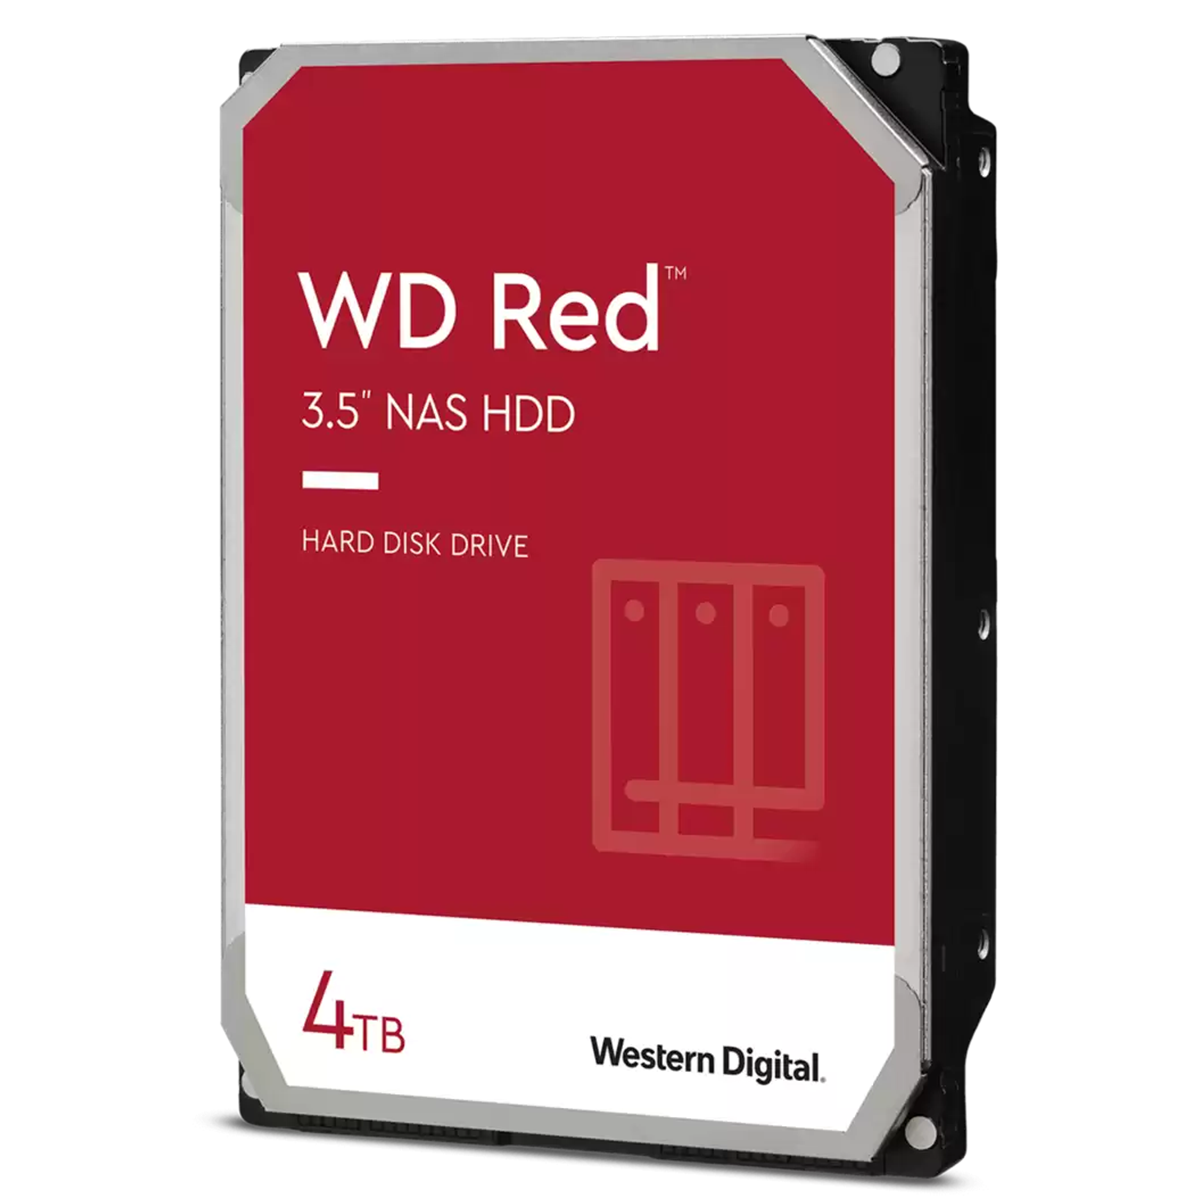 HD WD Red, 4TB, SATA, 5400RPM, NAS, 3.5', WD40EFAX